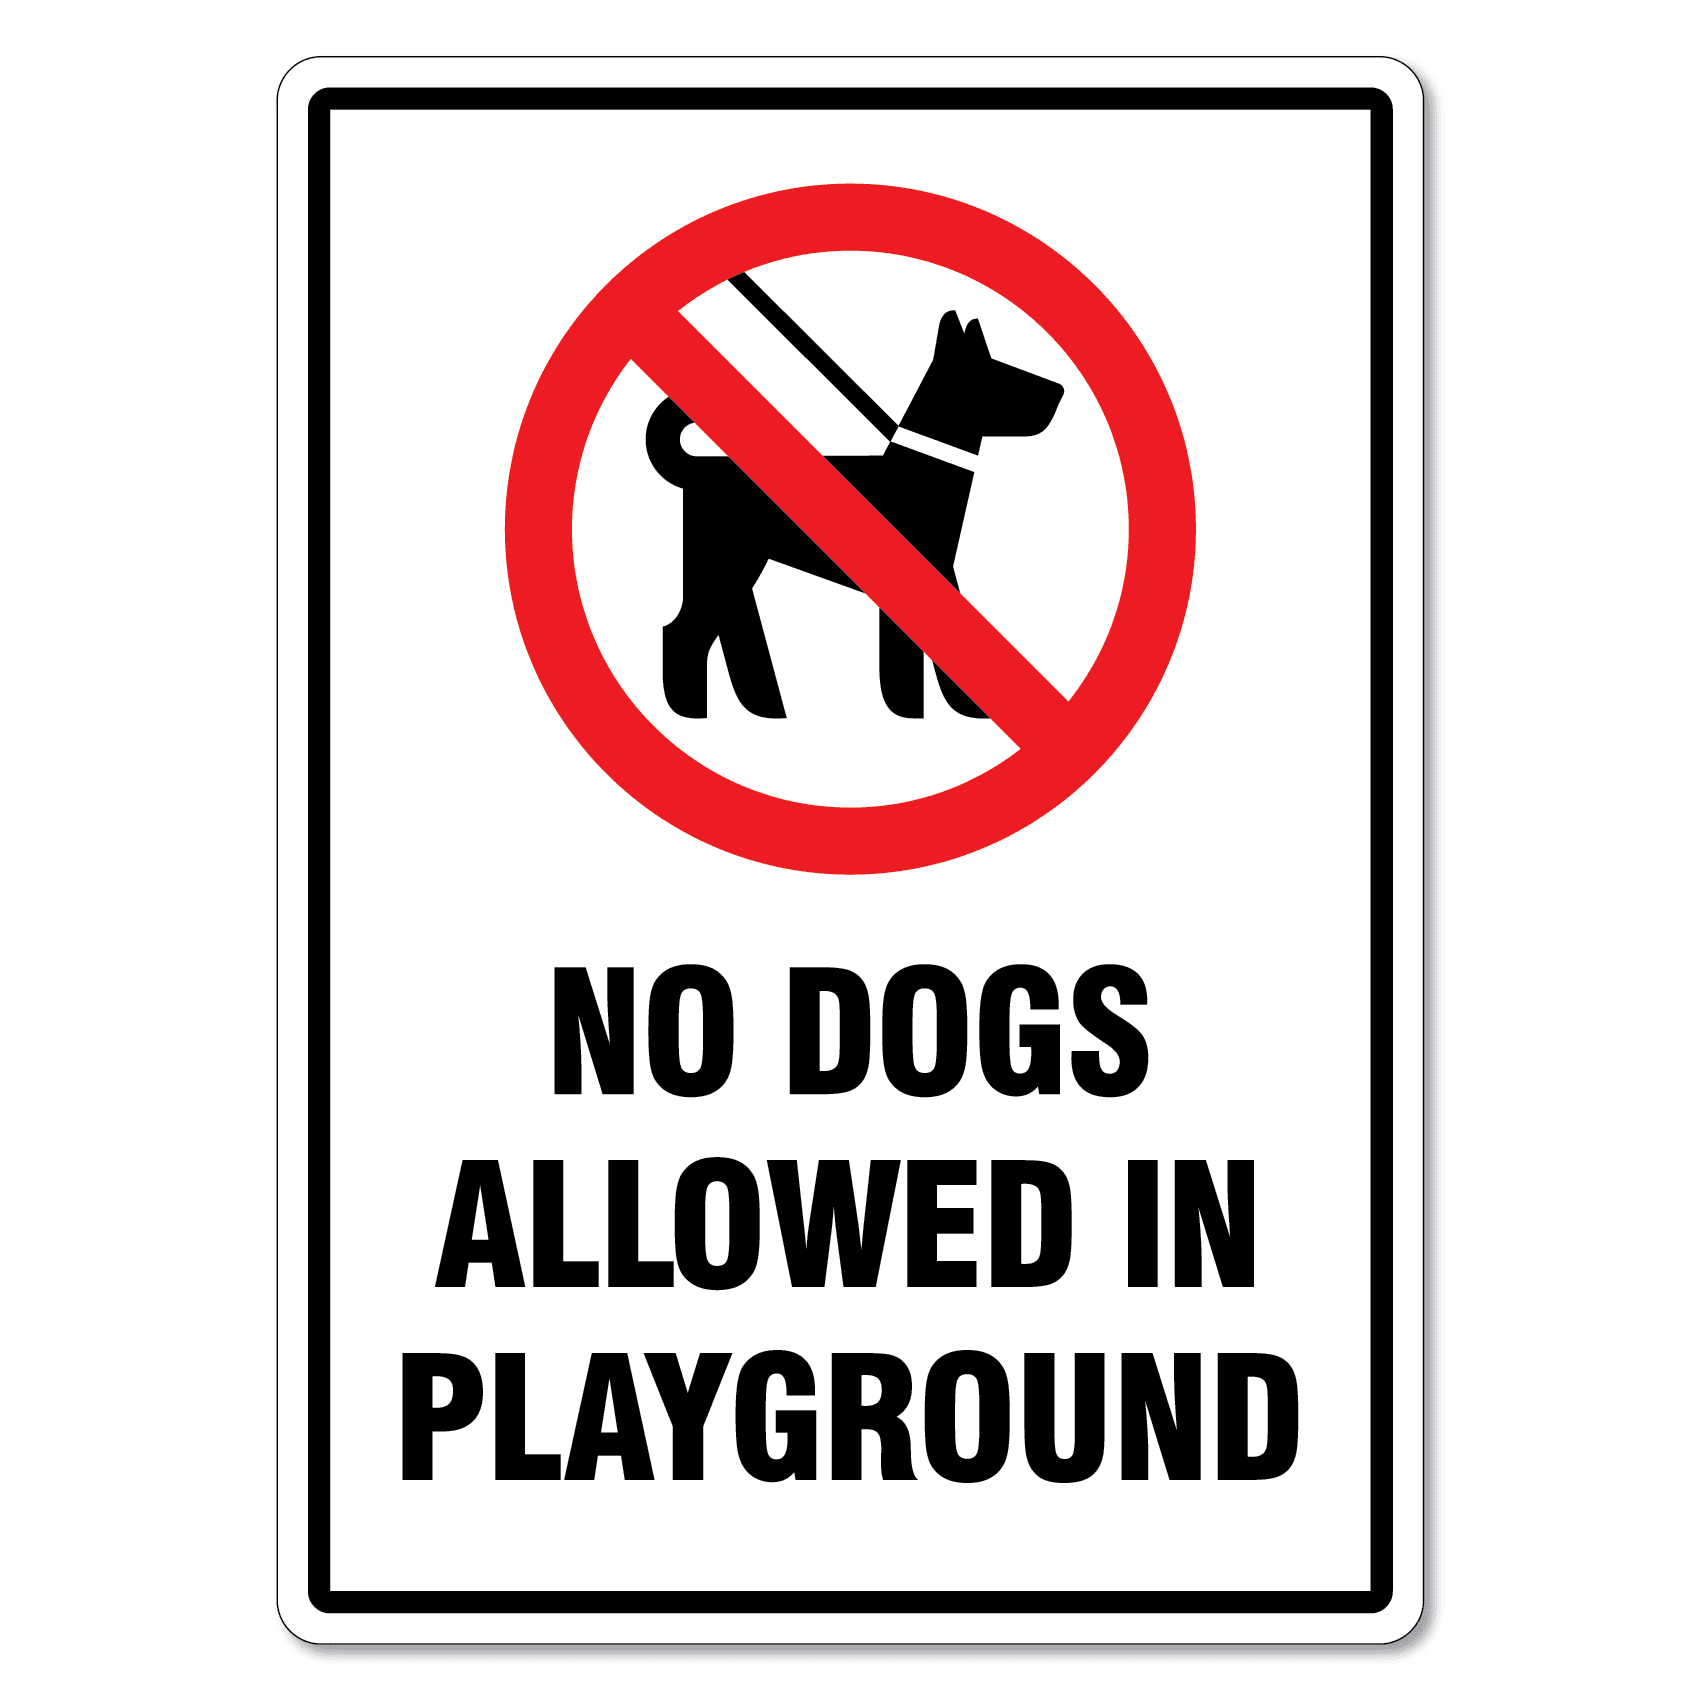 Dogs allowed. No Dogs. No Dogs табличка. No Dogs allowed. No Dog Safety sign.